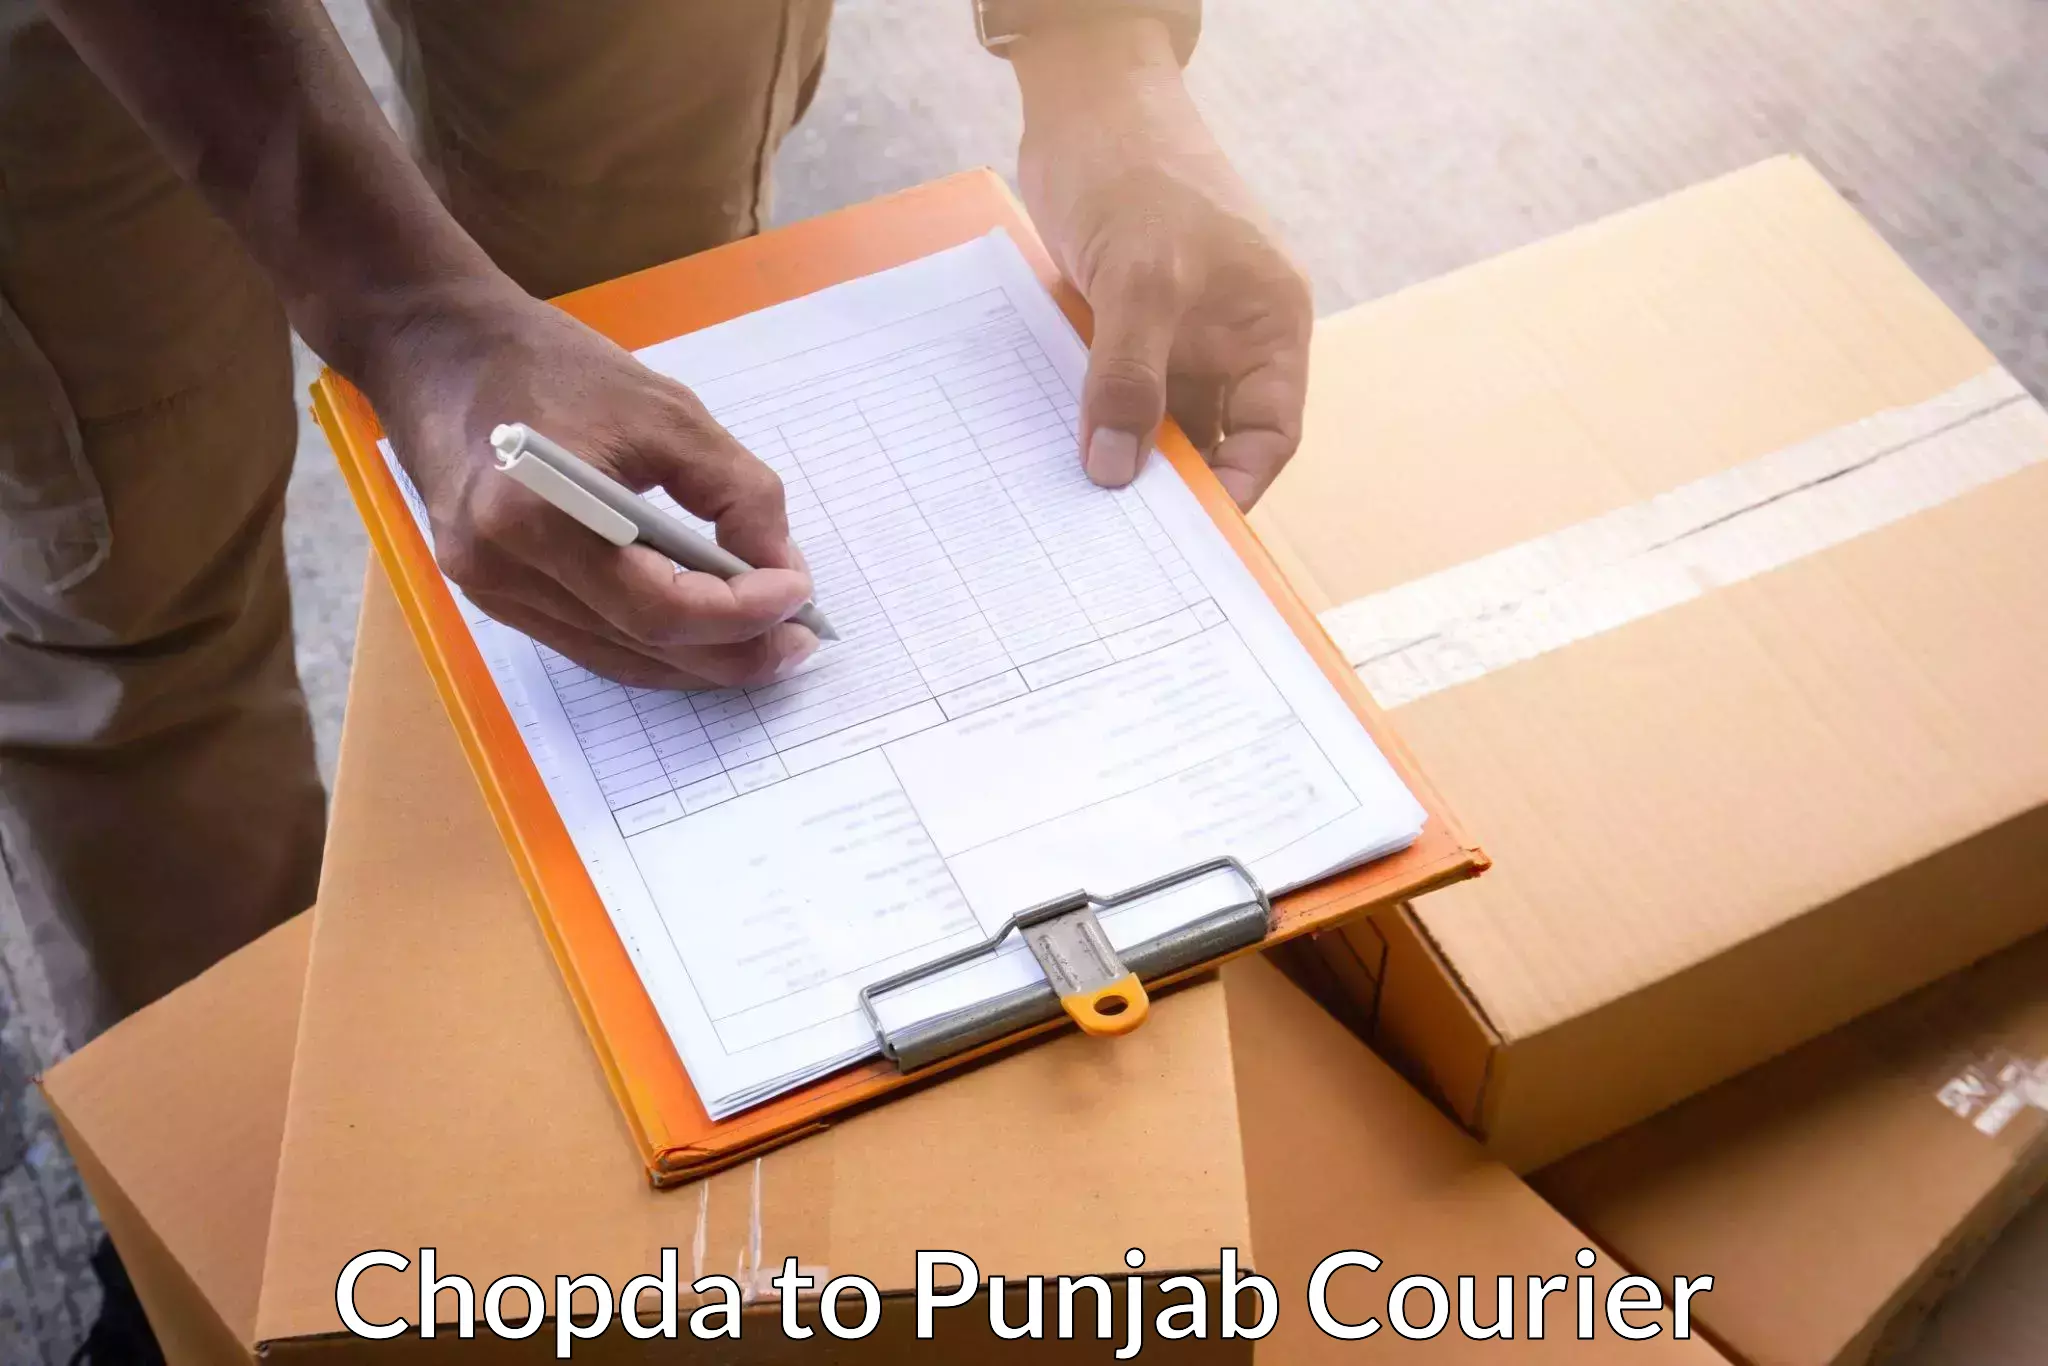 Professional courier handling Chopda to Punjab